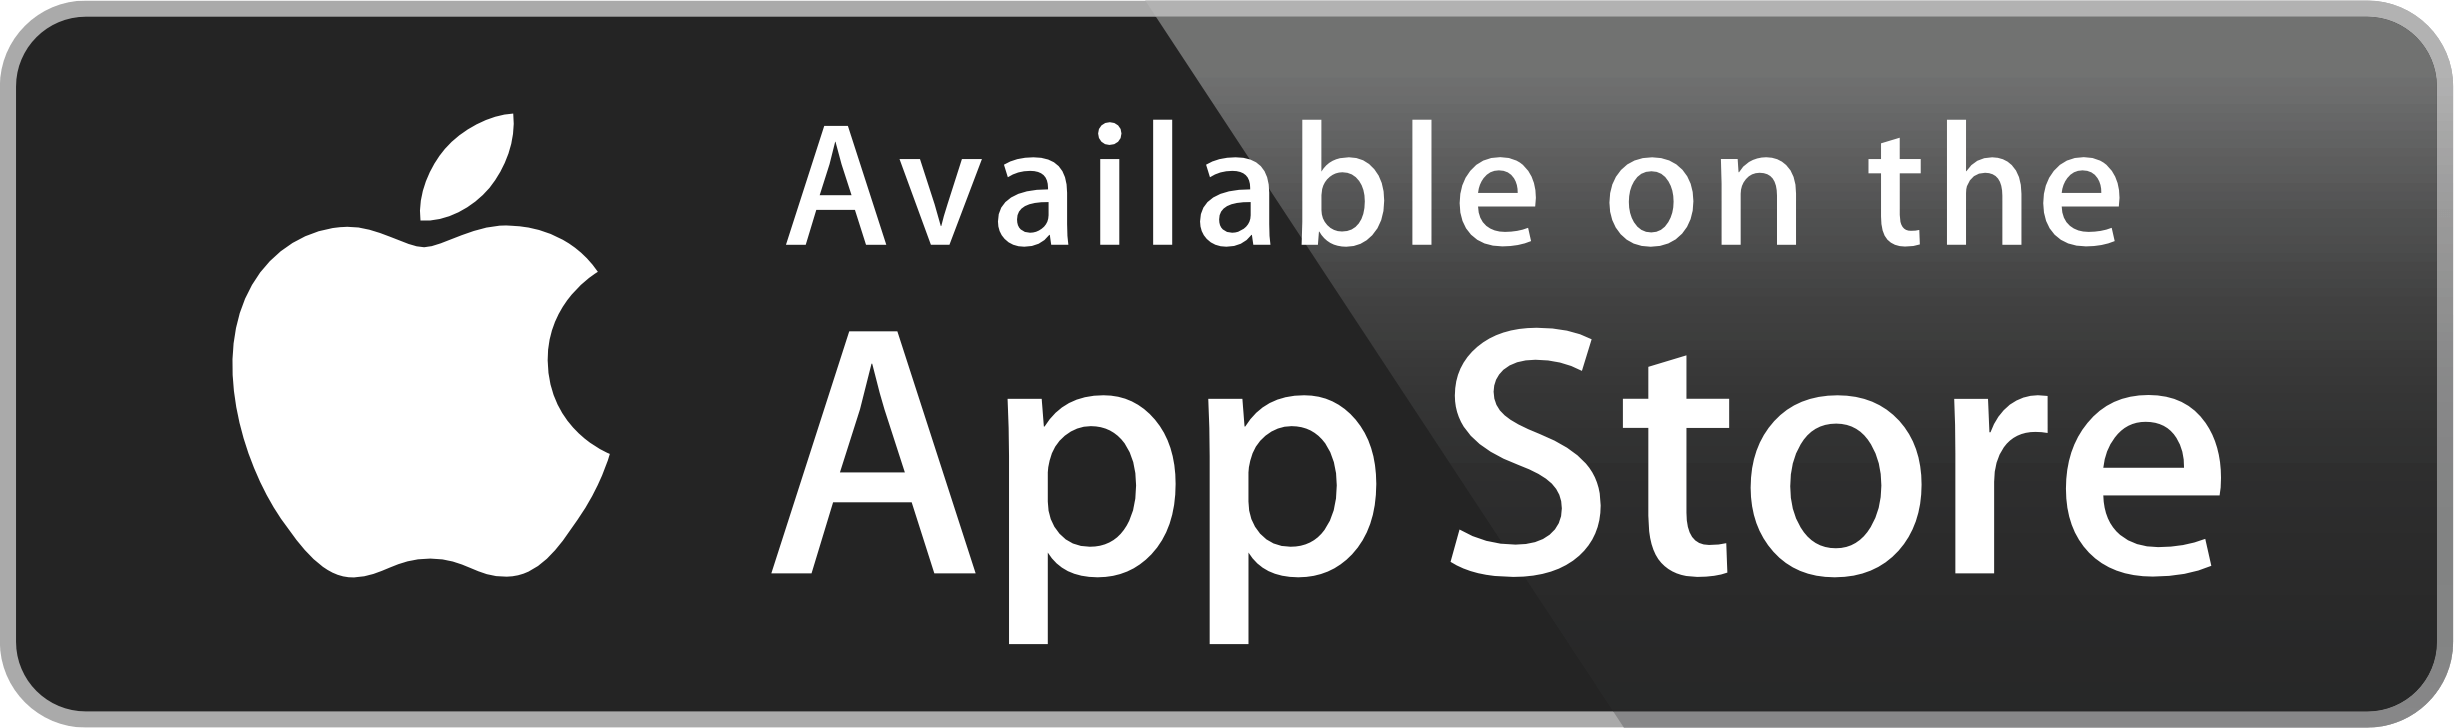 1xbet App for Apple